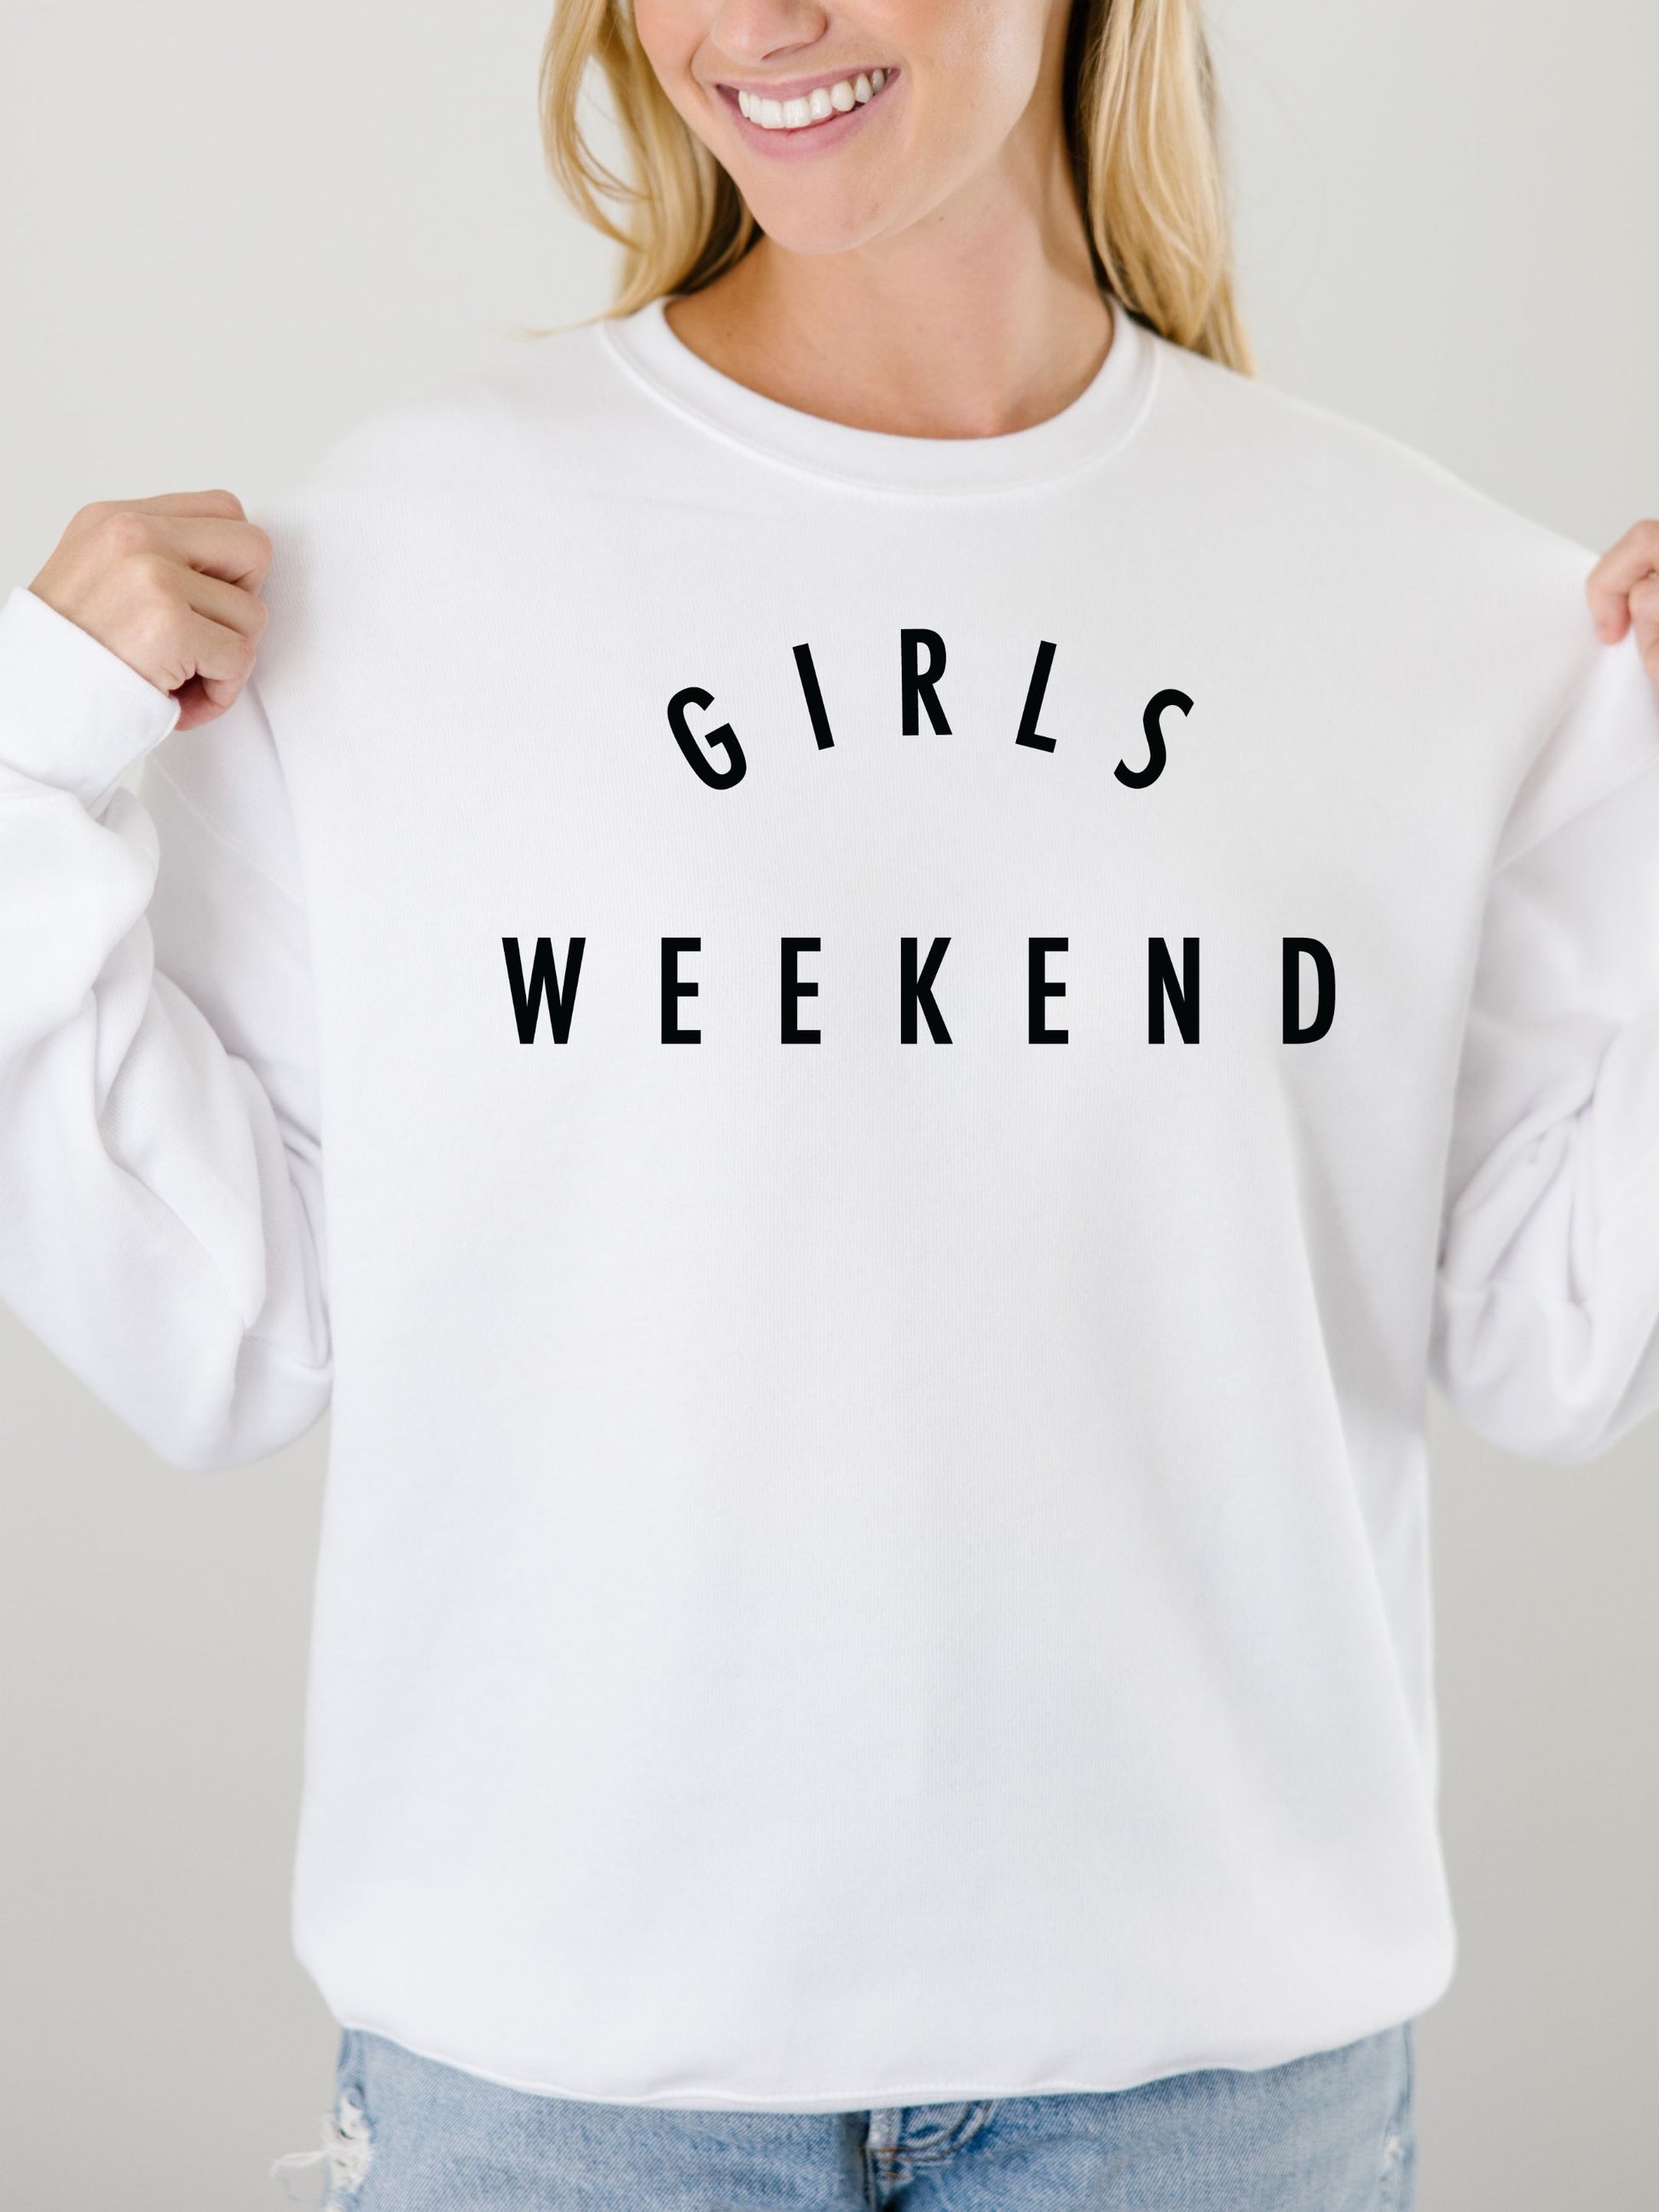 Classic Girls Weekend Sweatshirt for girls night in